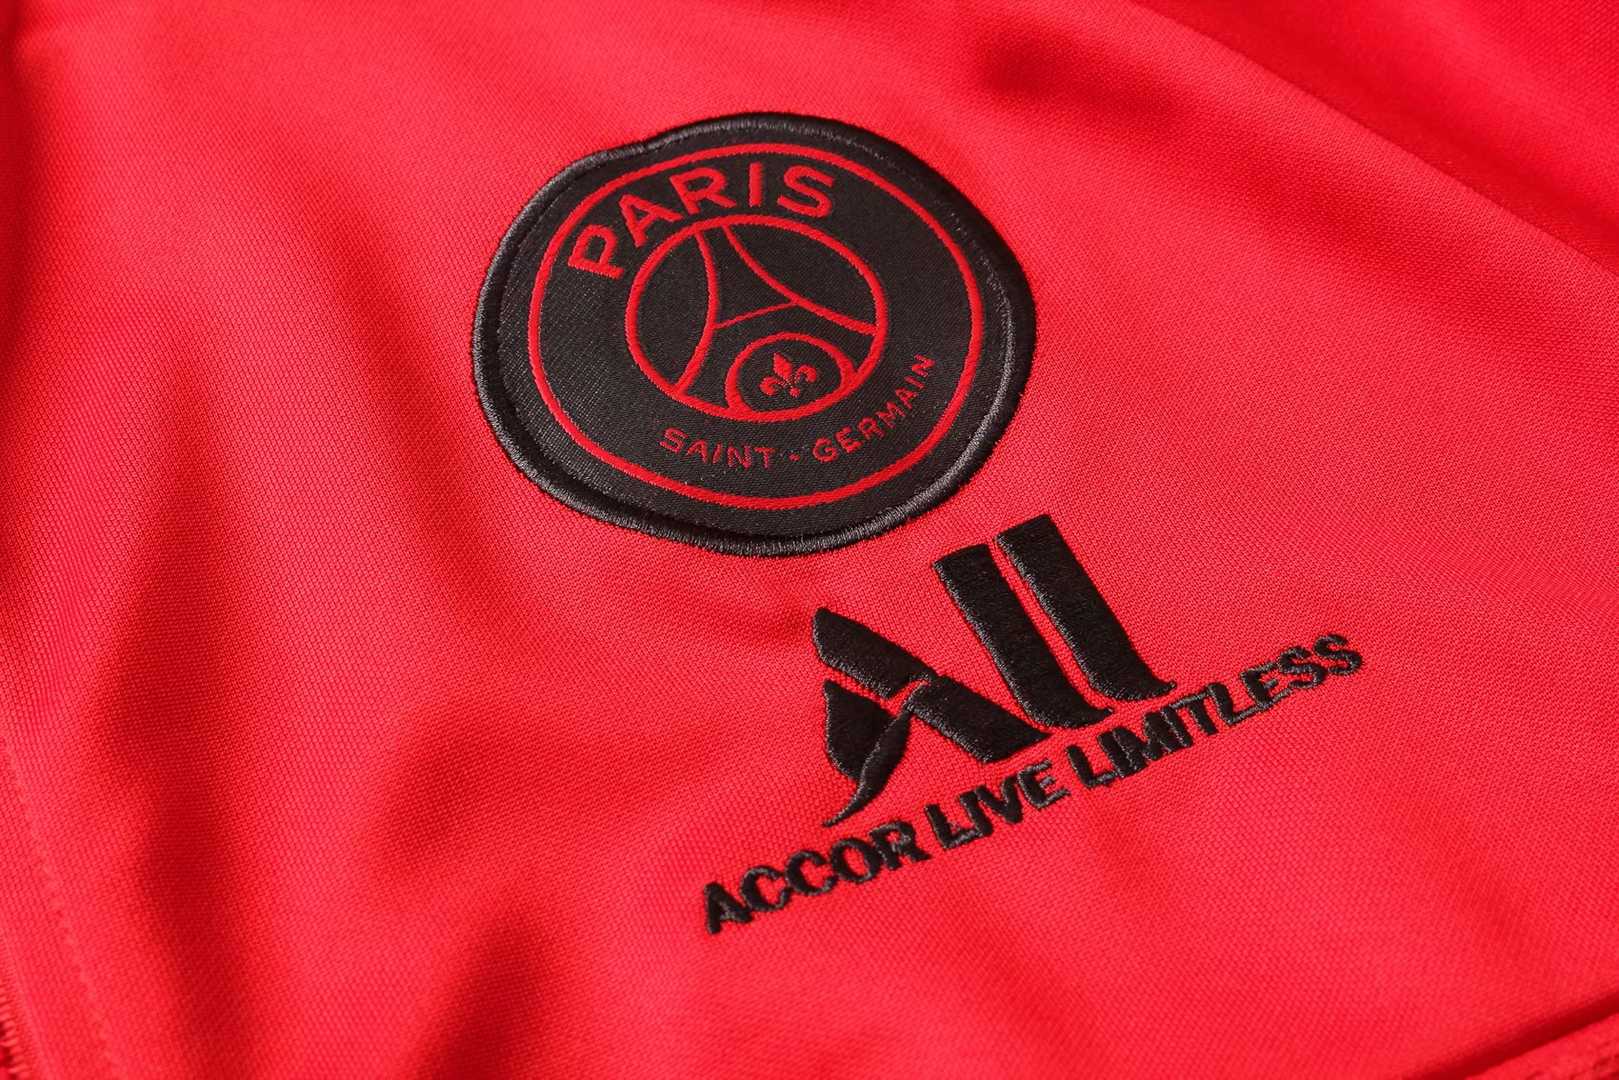 2019/20 PSG Red Mens Soccer Training Suit(Jacket + Pants)